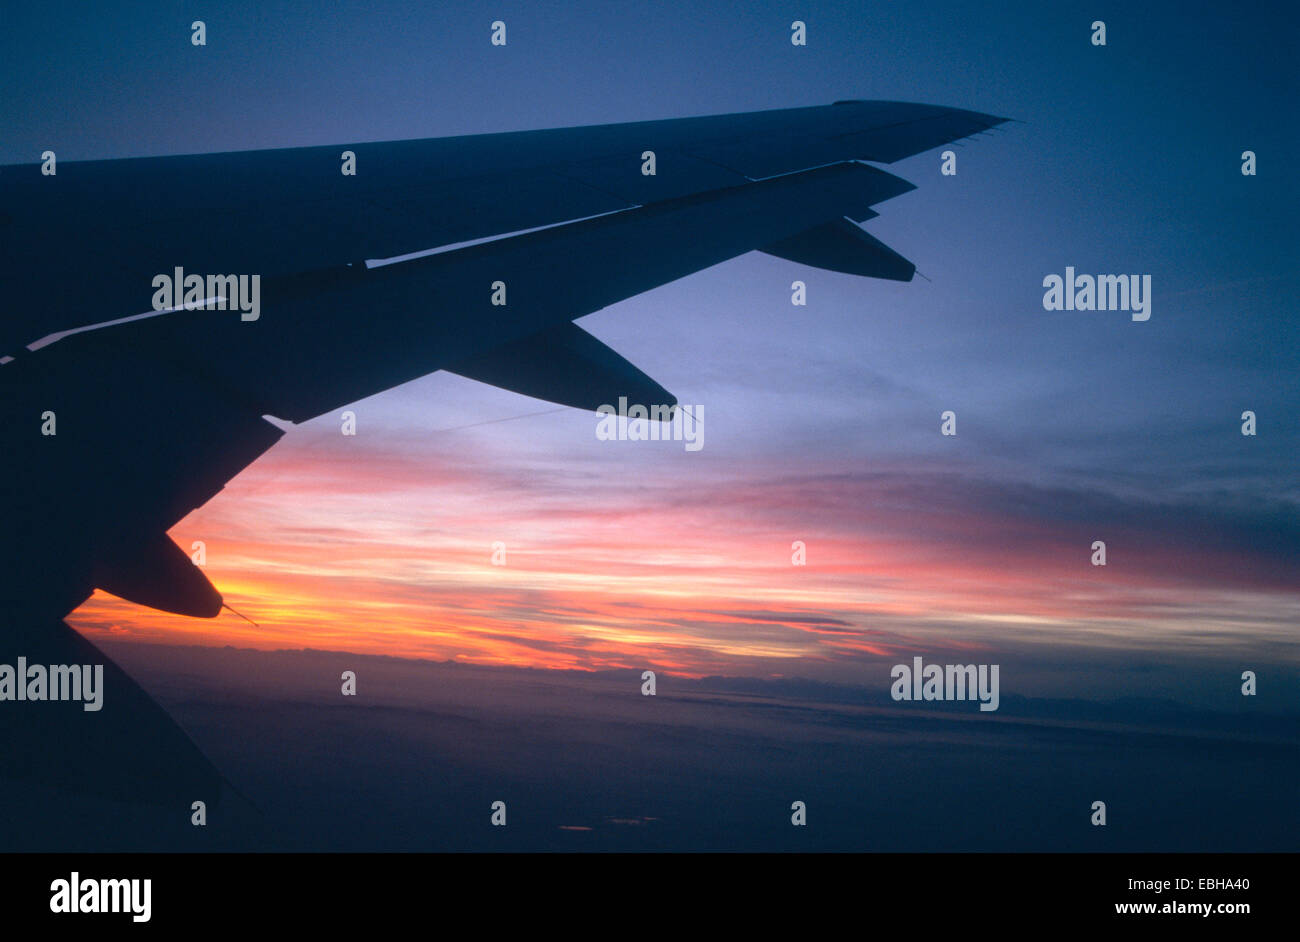 airfoil of passenger aircraft, Spain, Jan 02. Stock Photo